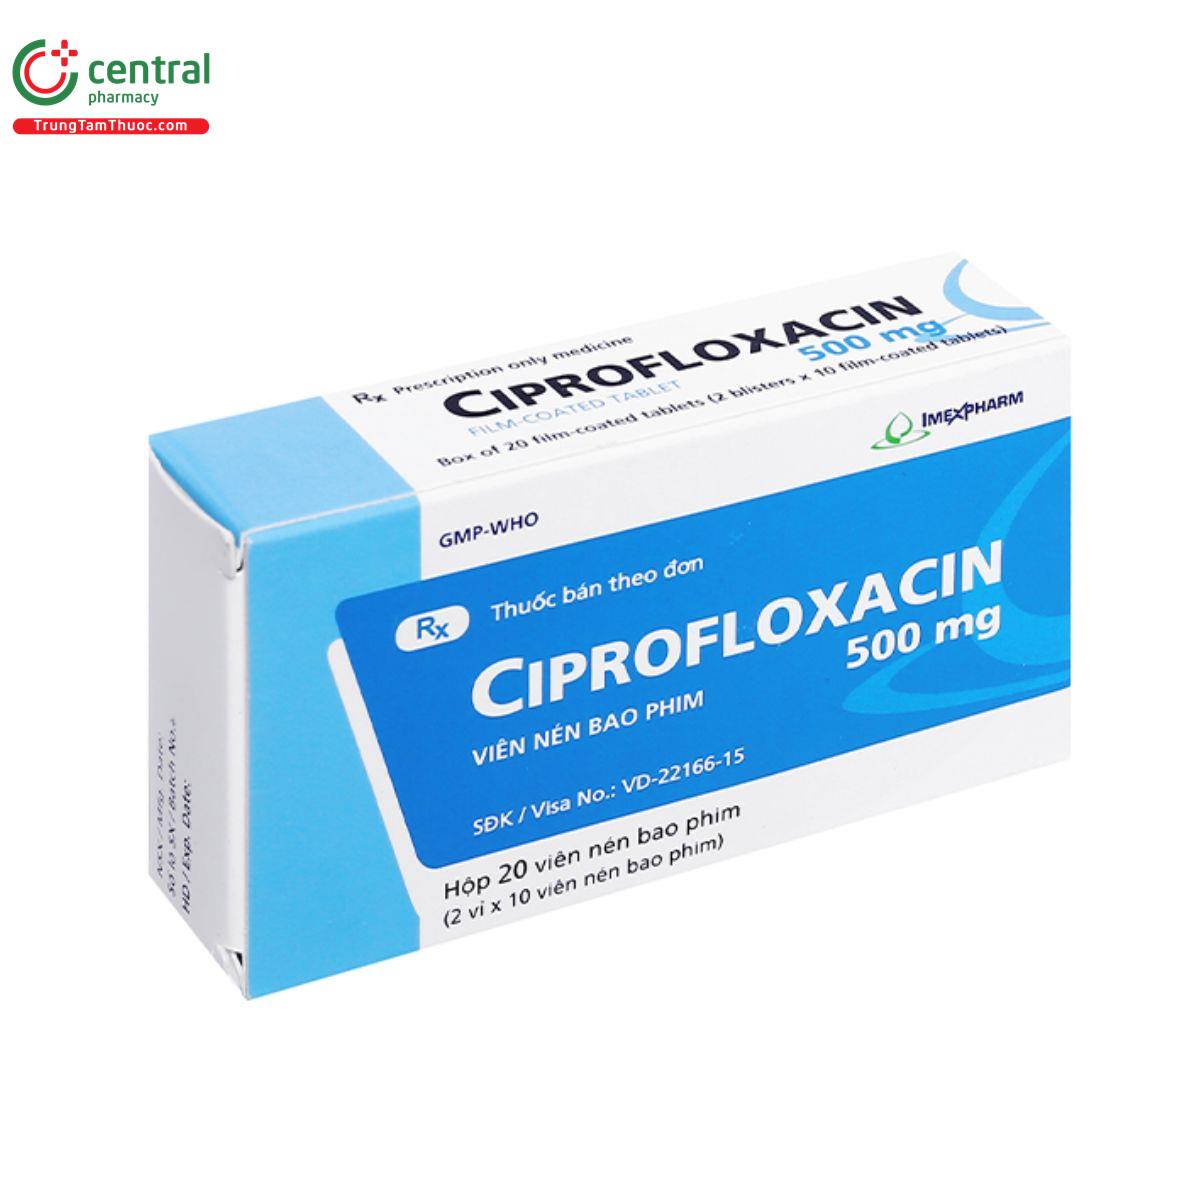 ciprofloxacin 500mg imexpharm 5 B0554